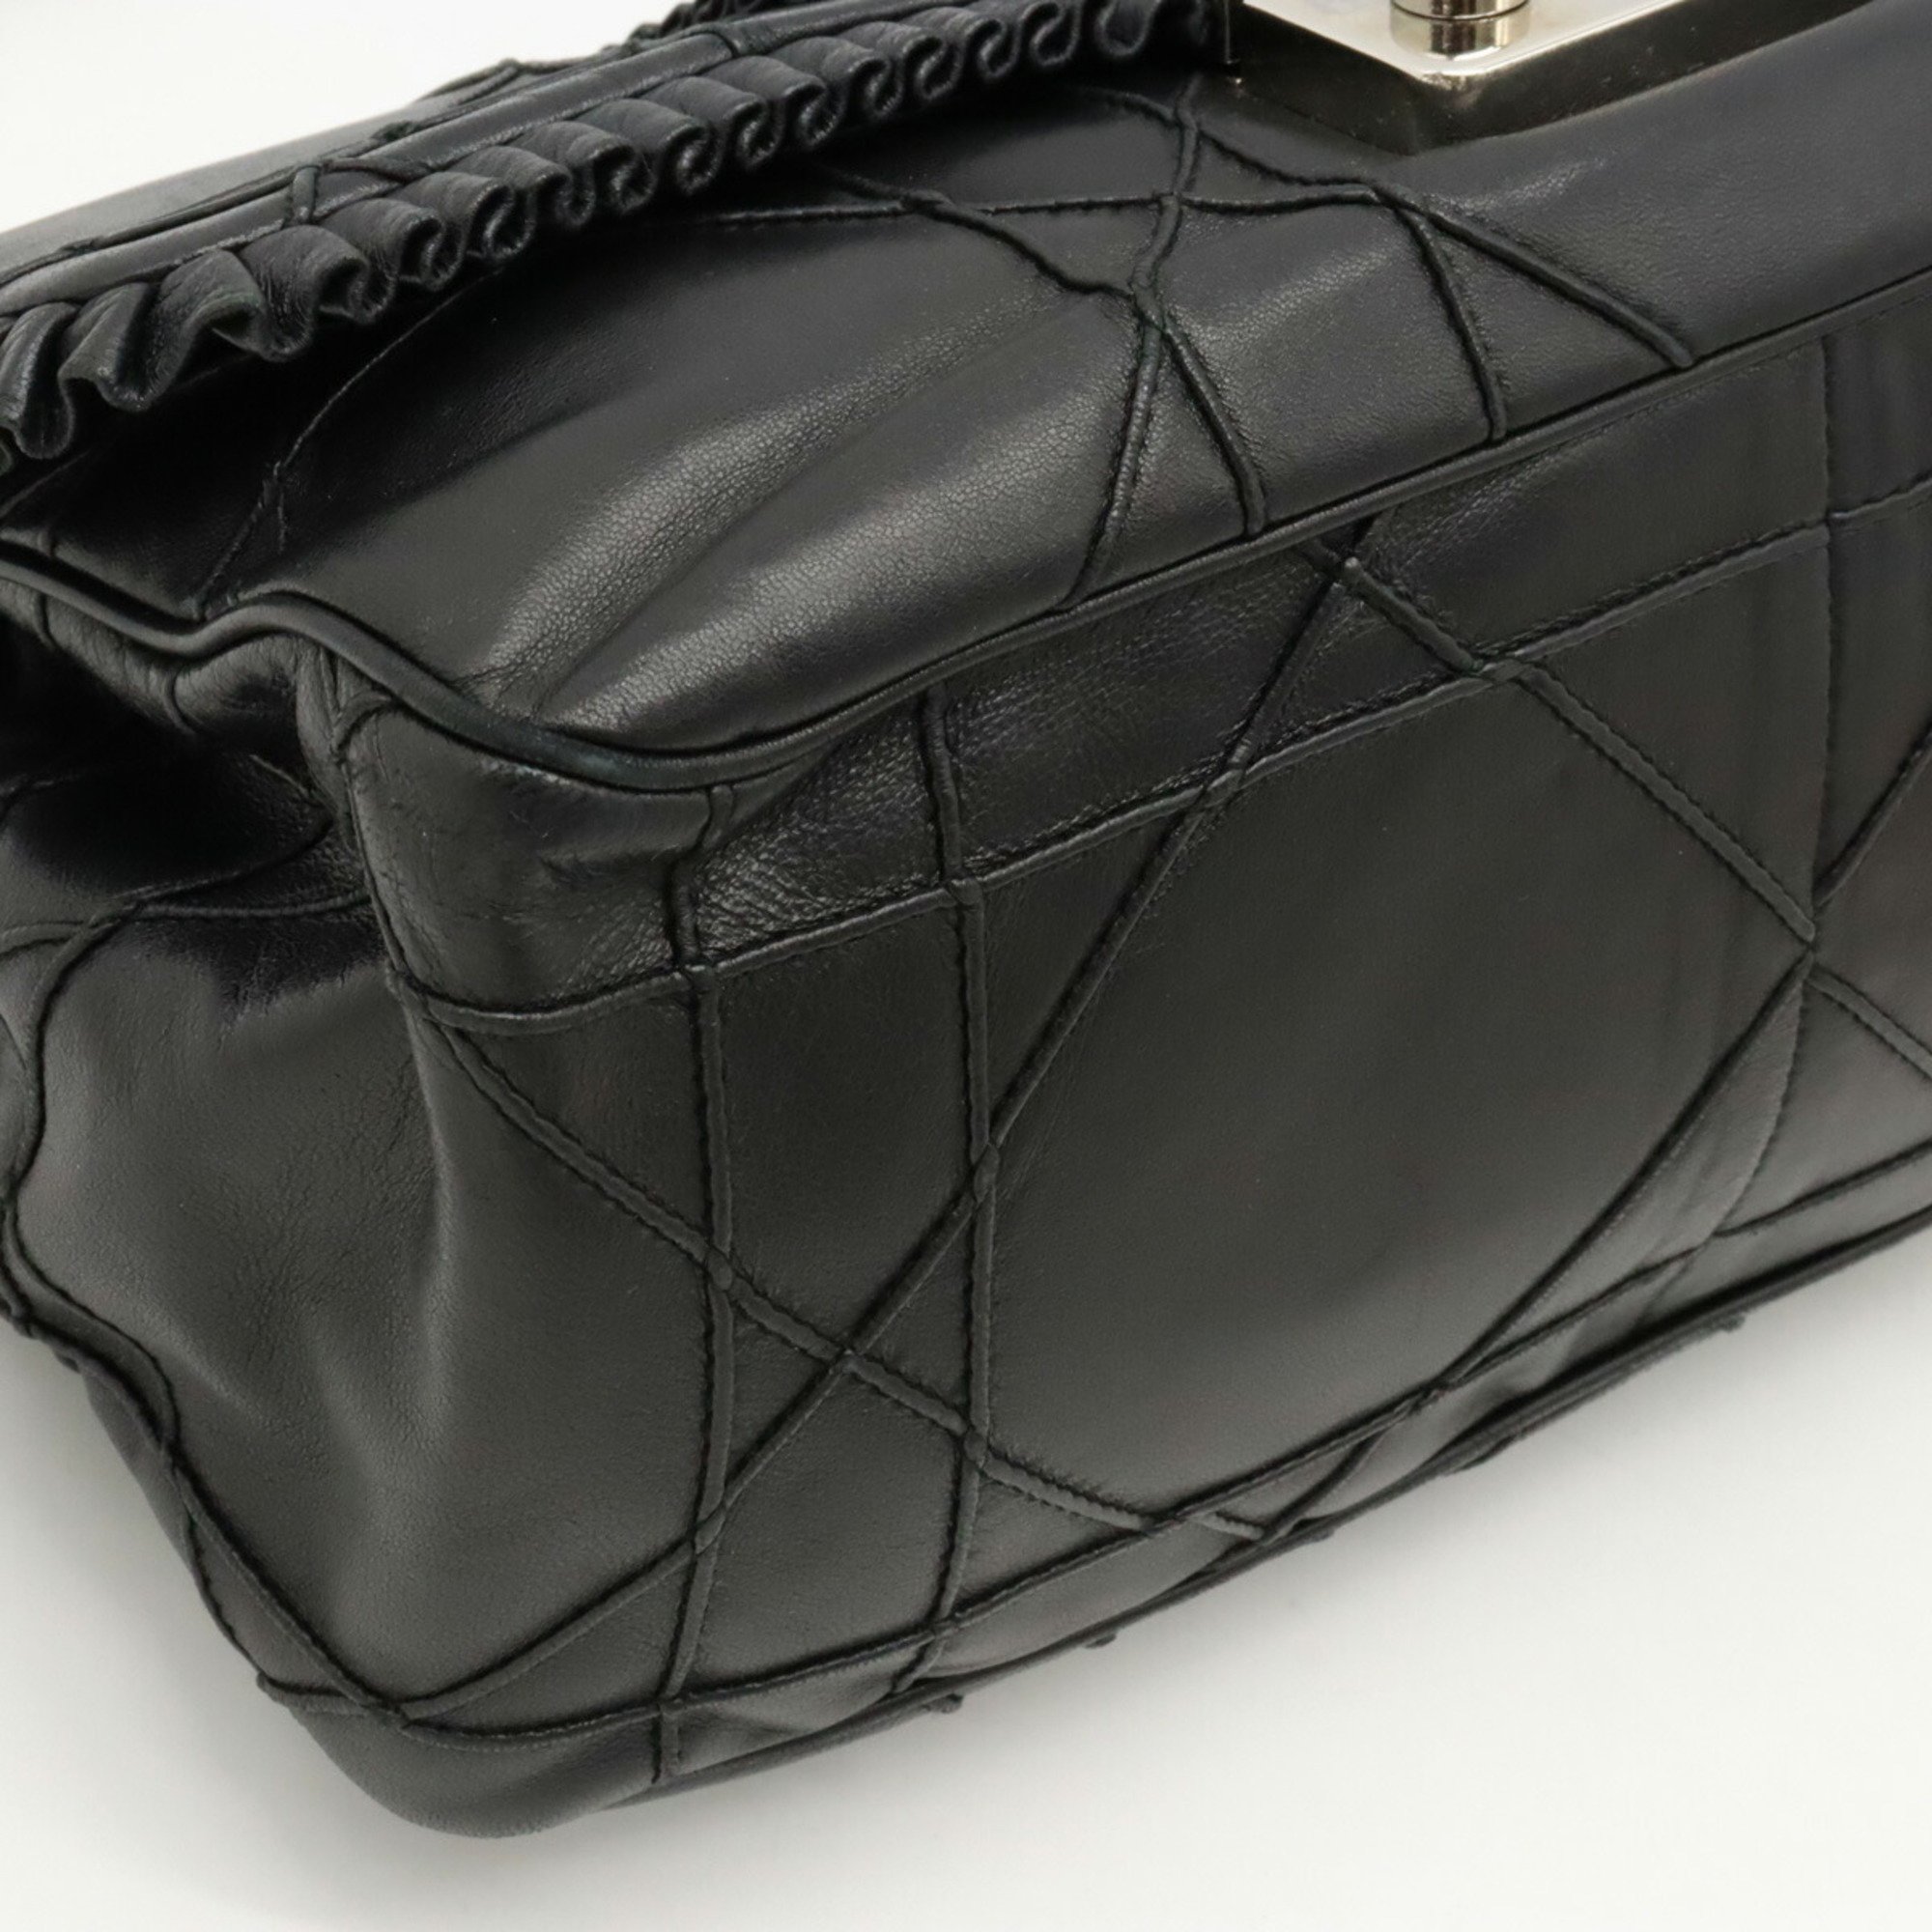 Christian Dior New Rock Chain Shoulder Bag Ruffle Leather Black